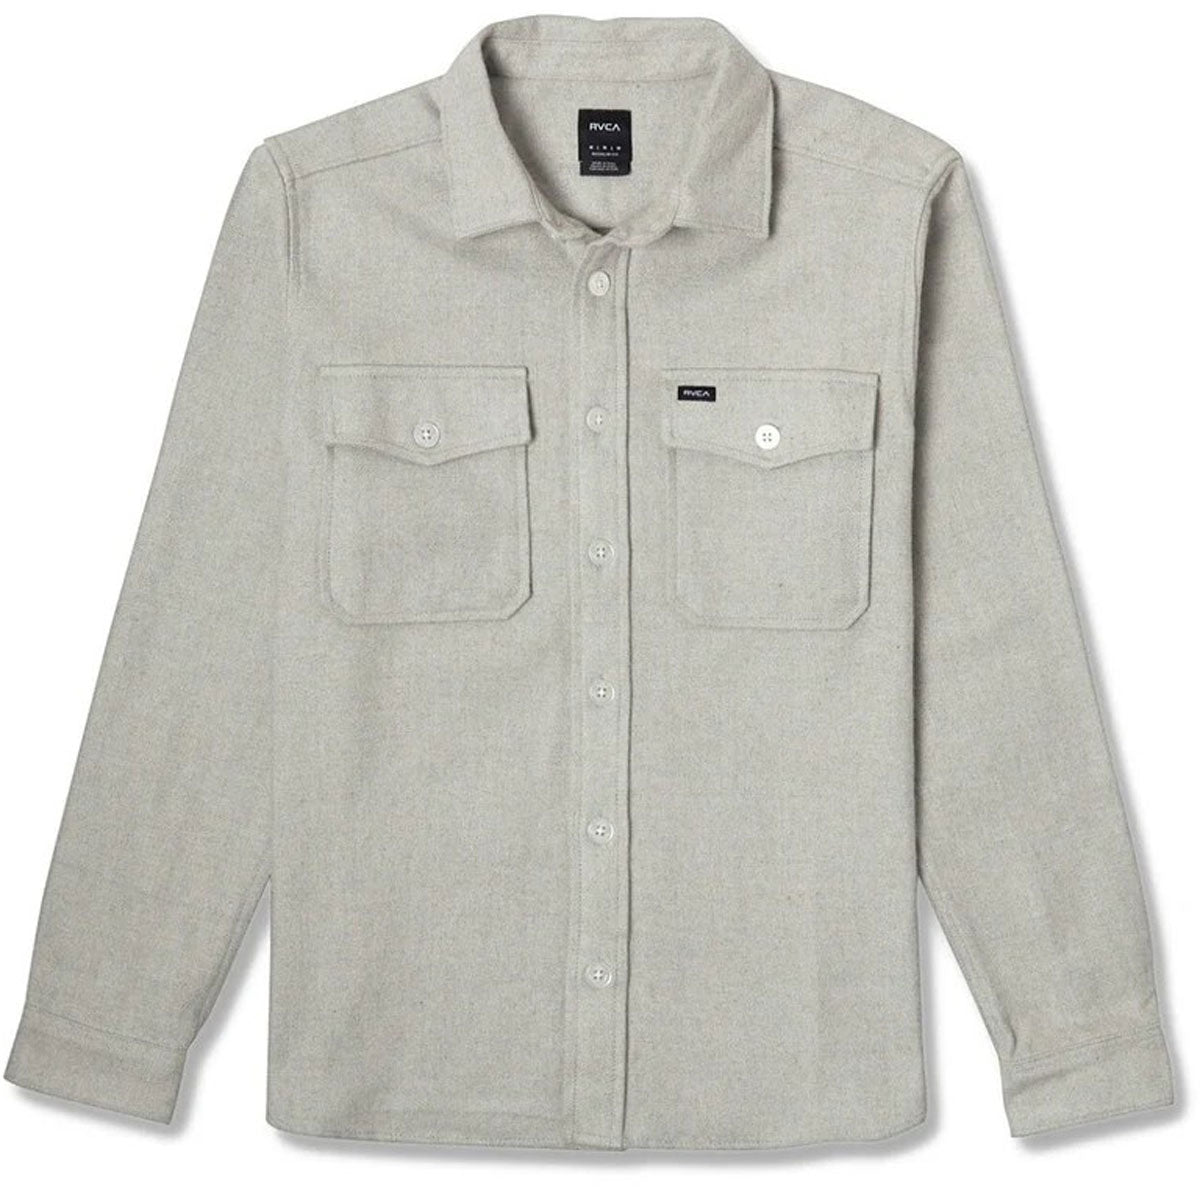 RVCA Va Cpo Long Sleeve Shirt - Grey Marle image 1